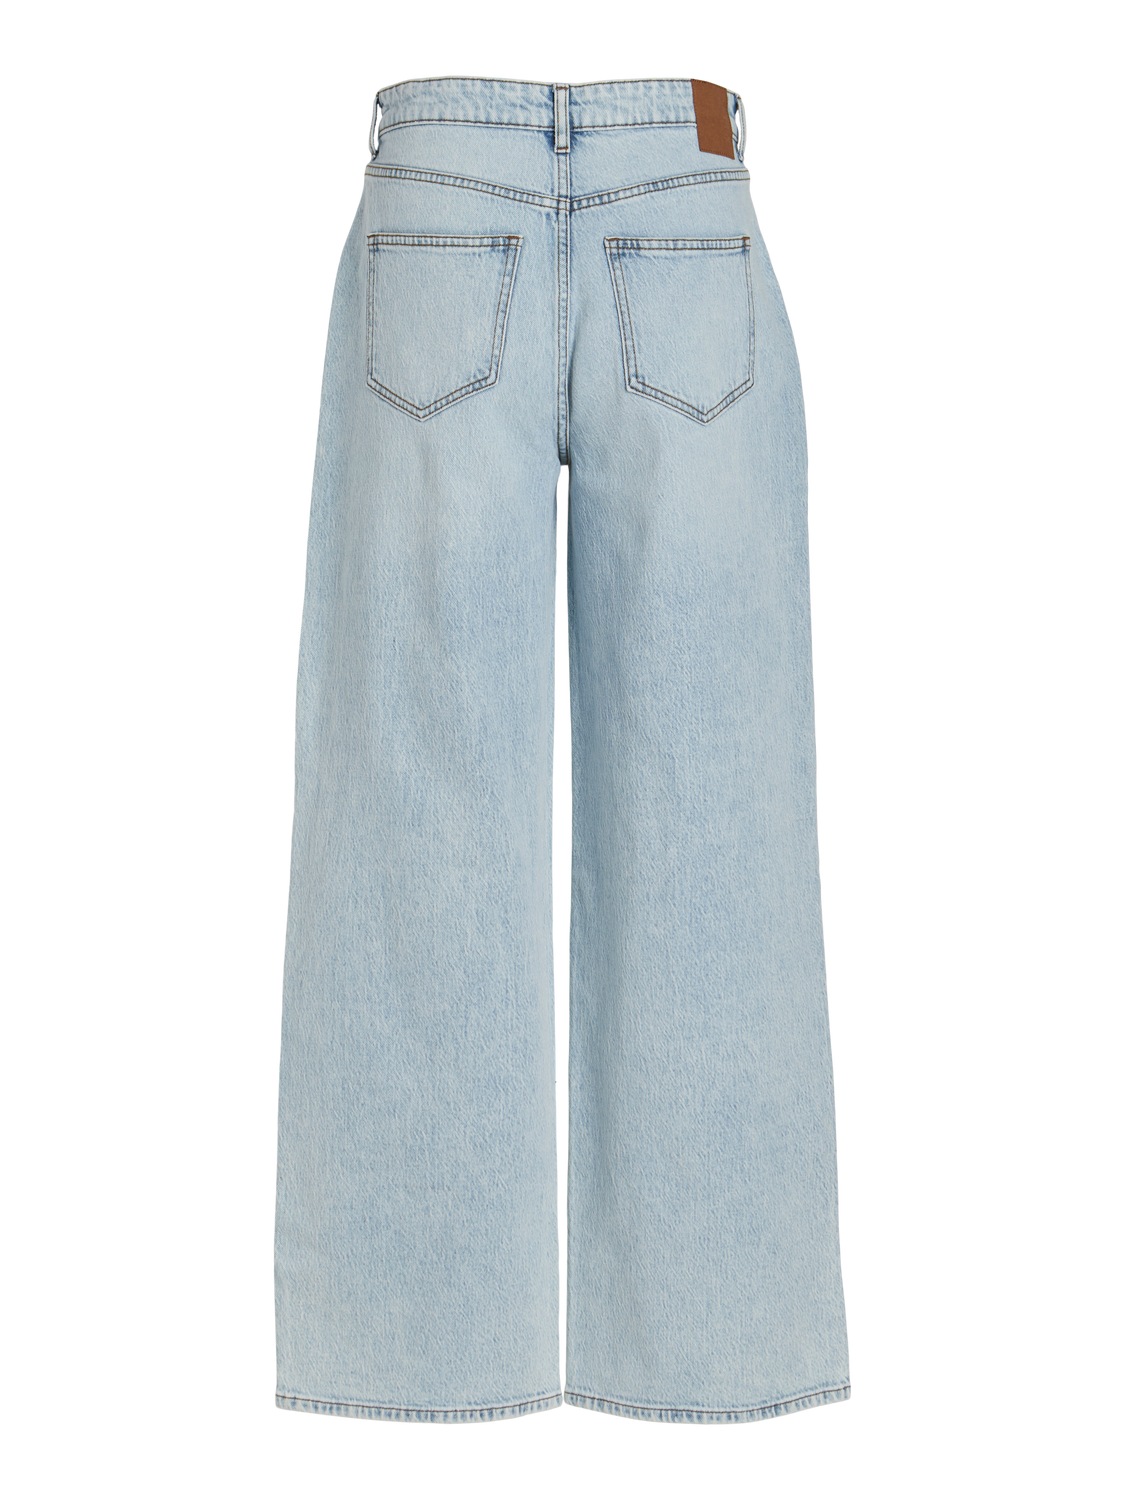 VIFREYA Jeans - Light Blue Denim